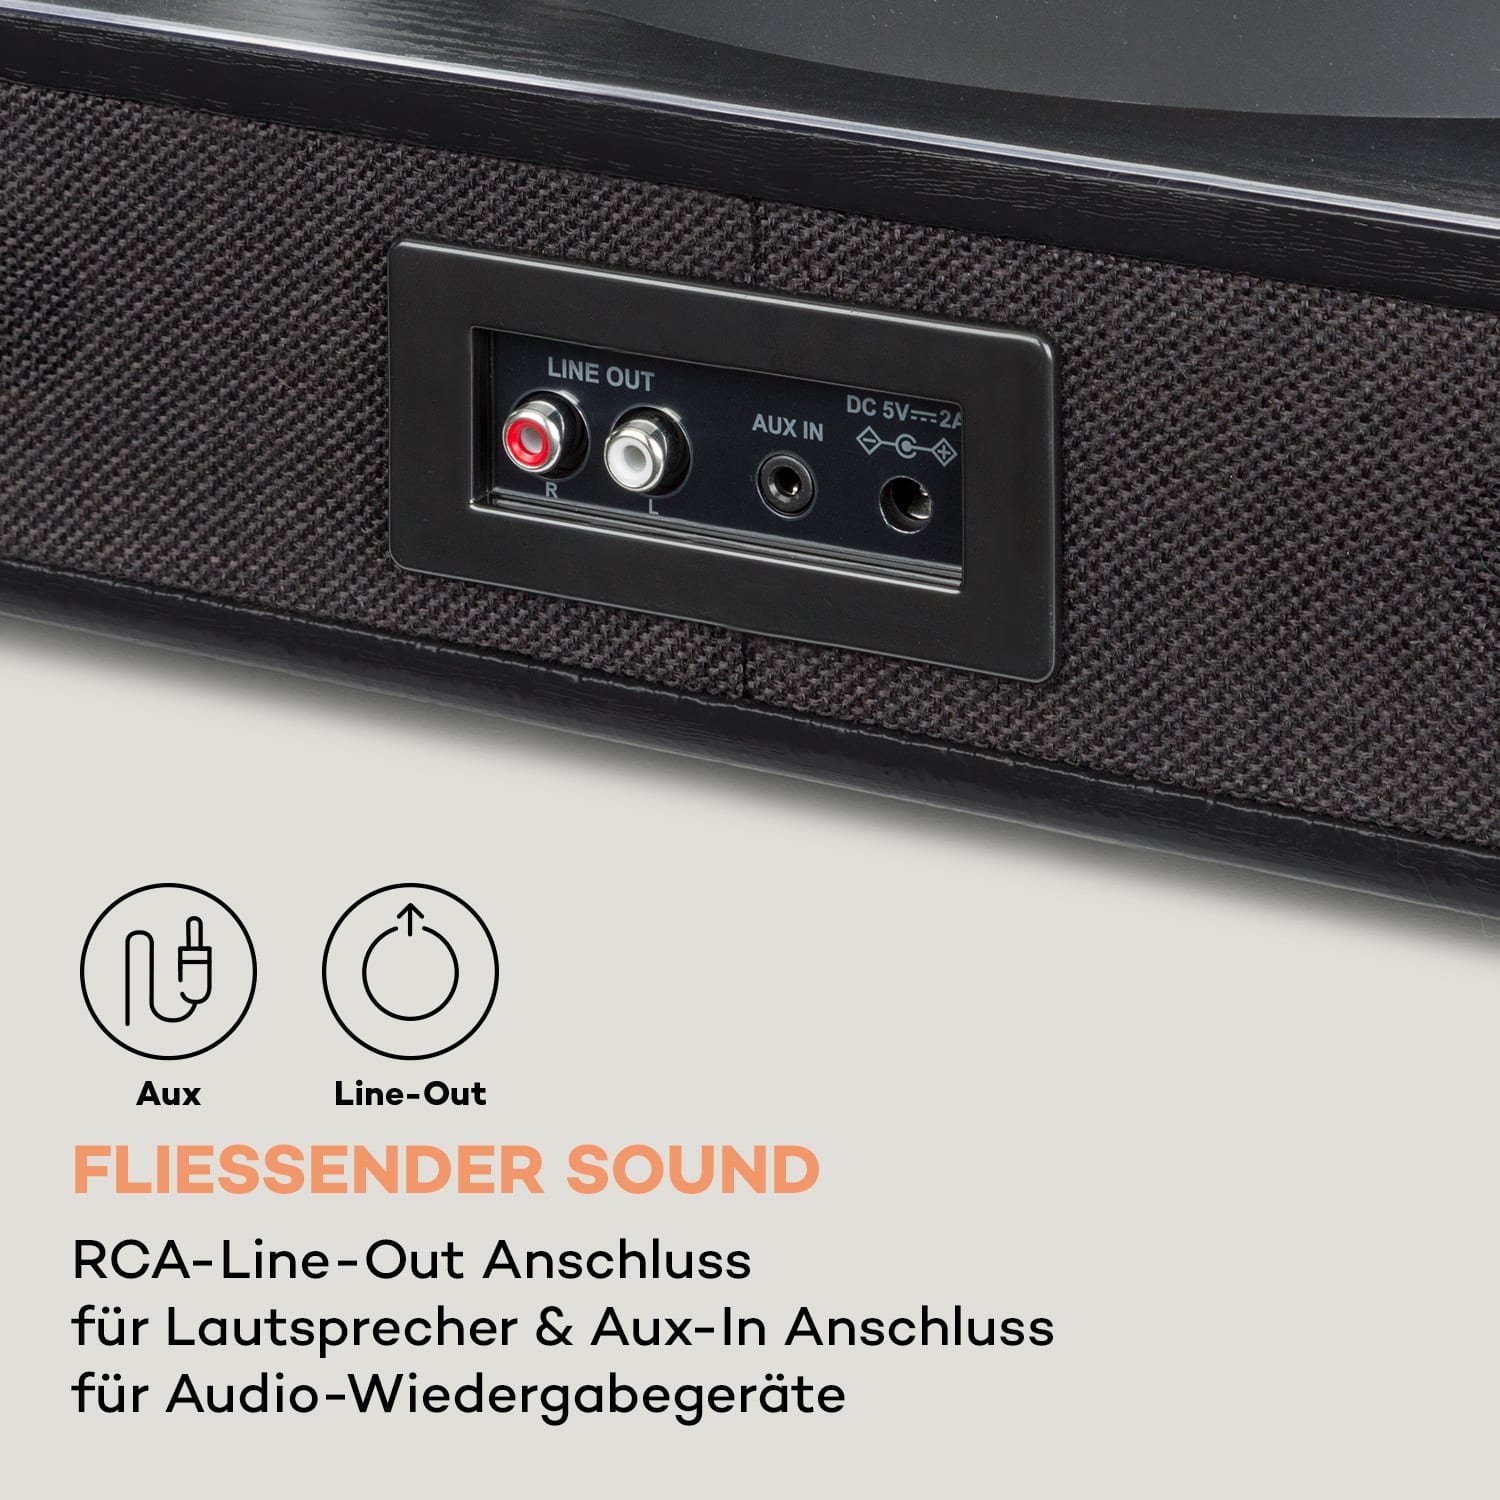 Auna TT-Classic Plus Plattenspieler mit (Riemenantrieb, Lautsprecher Plattenspieler) Vinyl Bluetooth, Schallplattenspieler